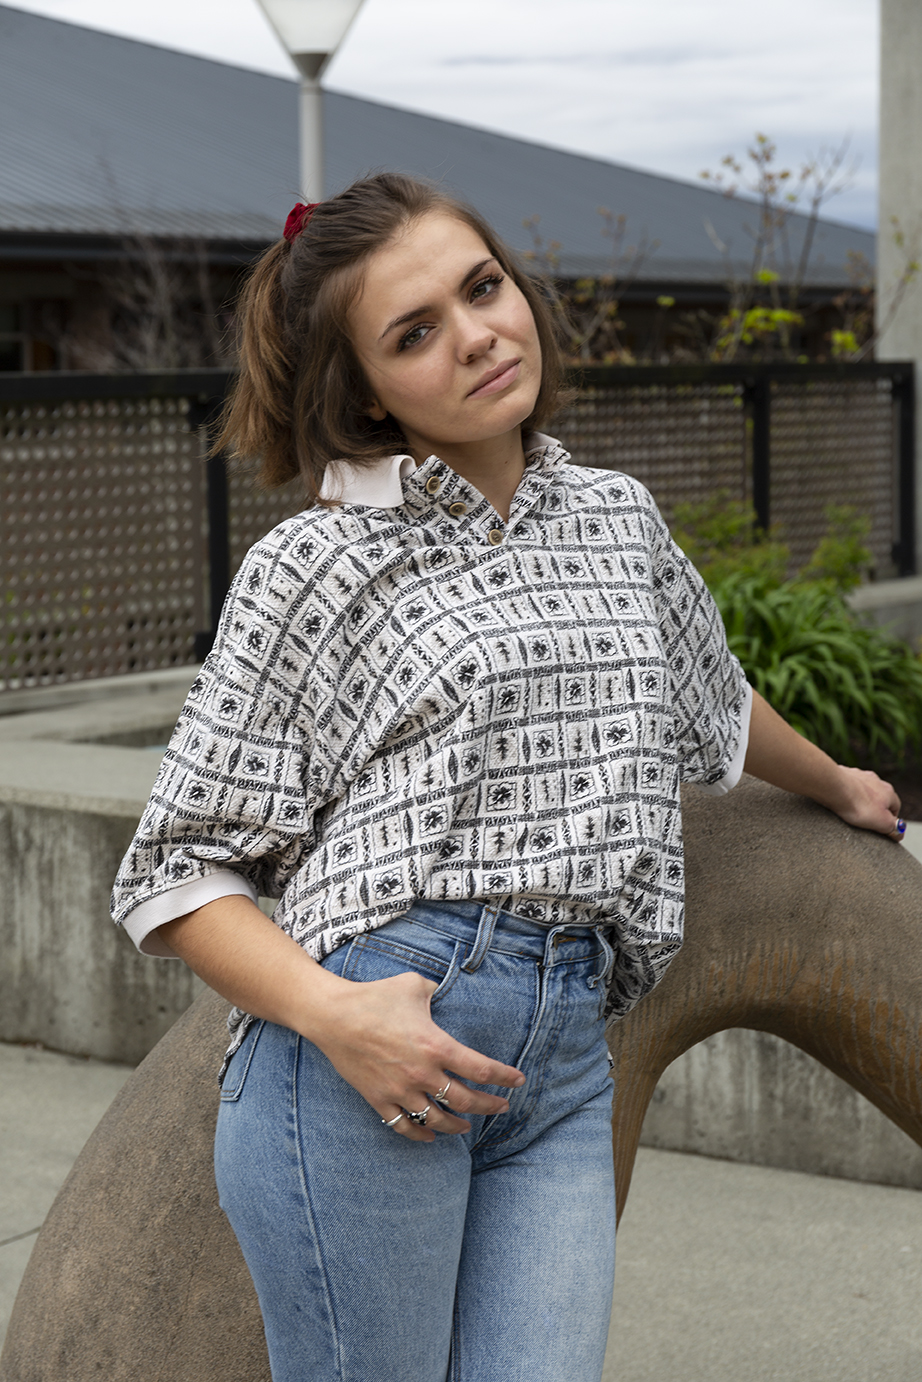 trends fashion comeback making alexa polo comfy loose davis rocks jeans student mom shirt